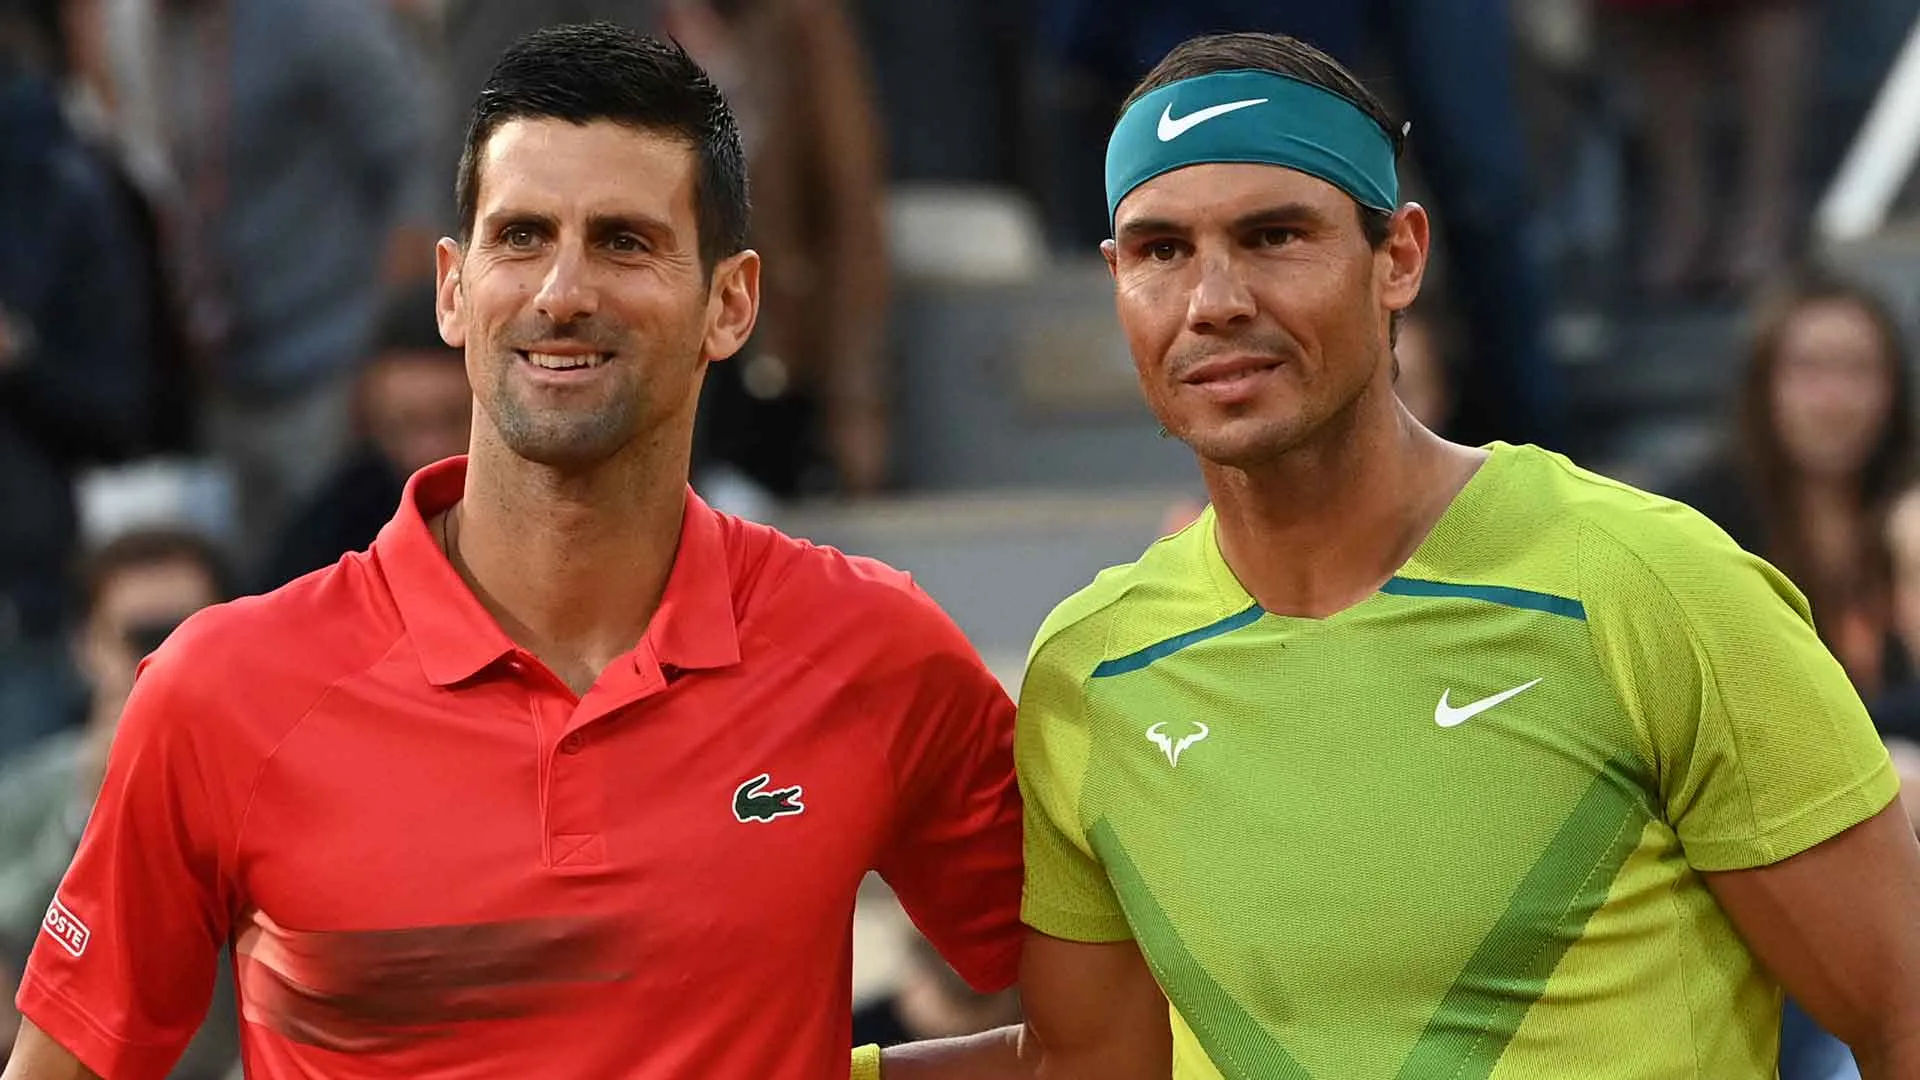 Djokovic vs Nadal: Head to head stats